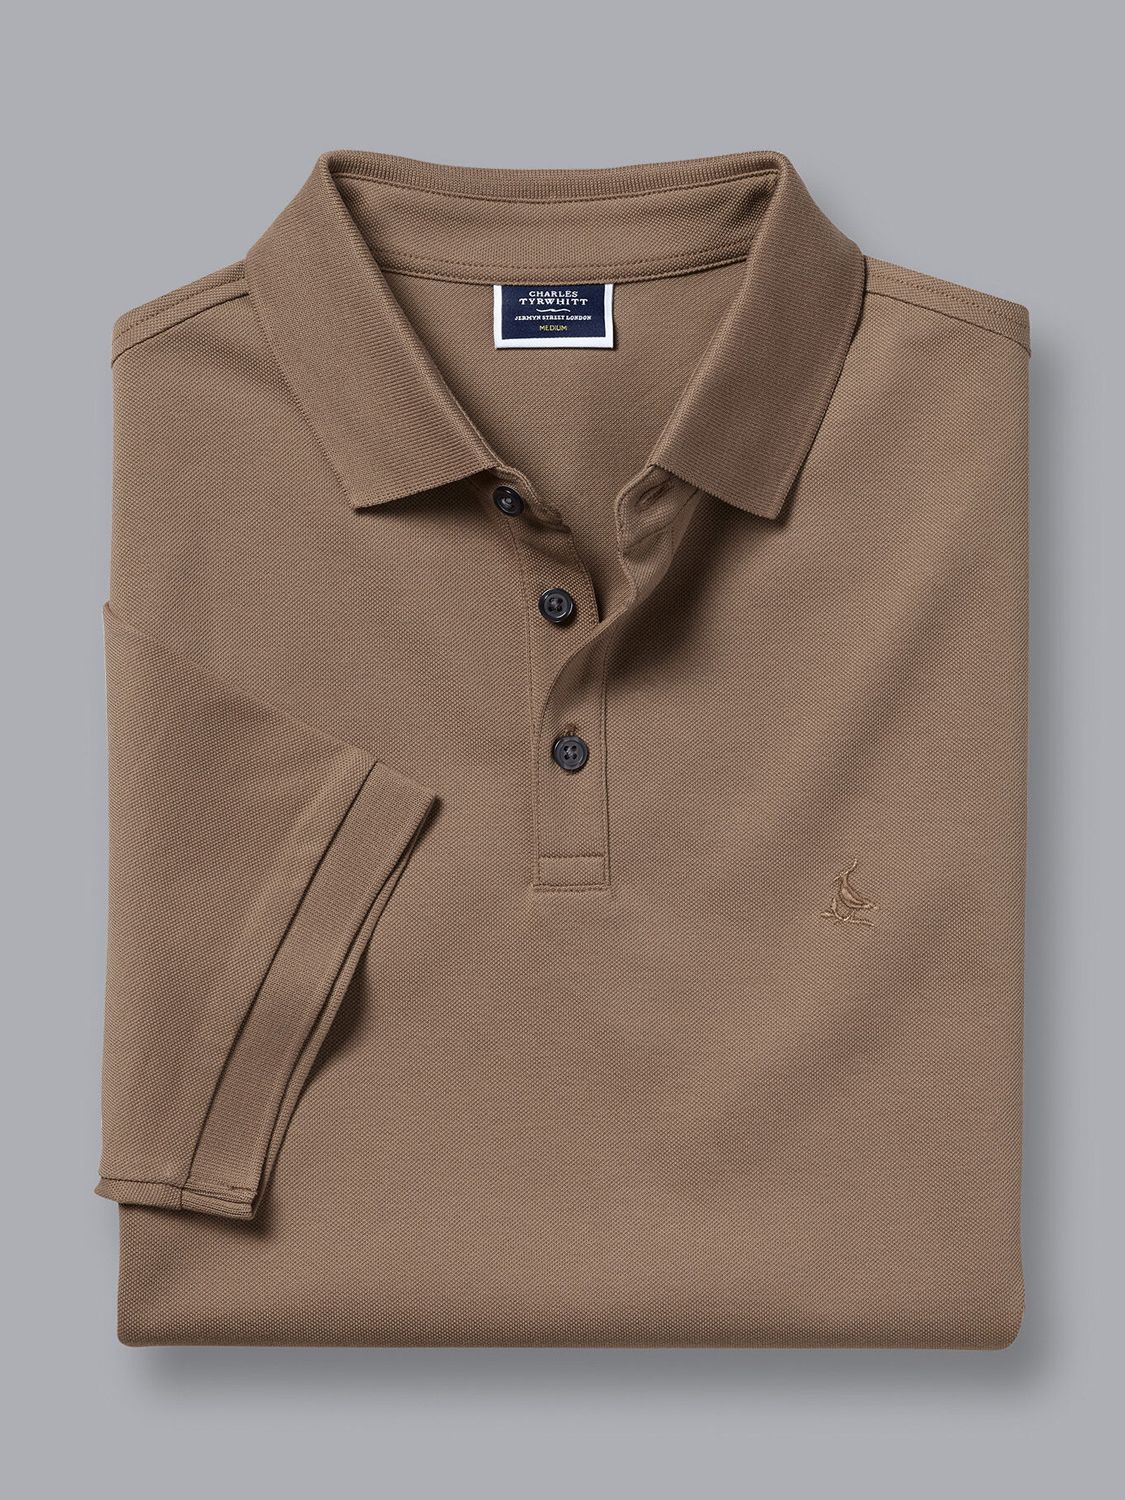 Charles Tyrwhitt Pique Polo Shirt, Camel at John Lewis & Partners